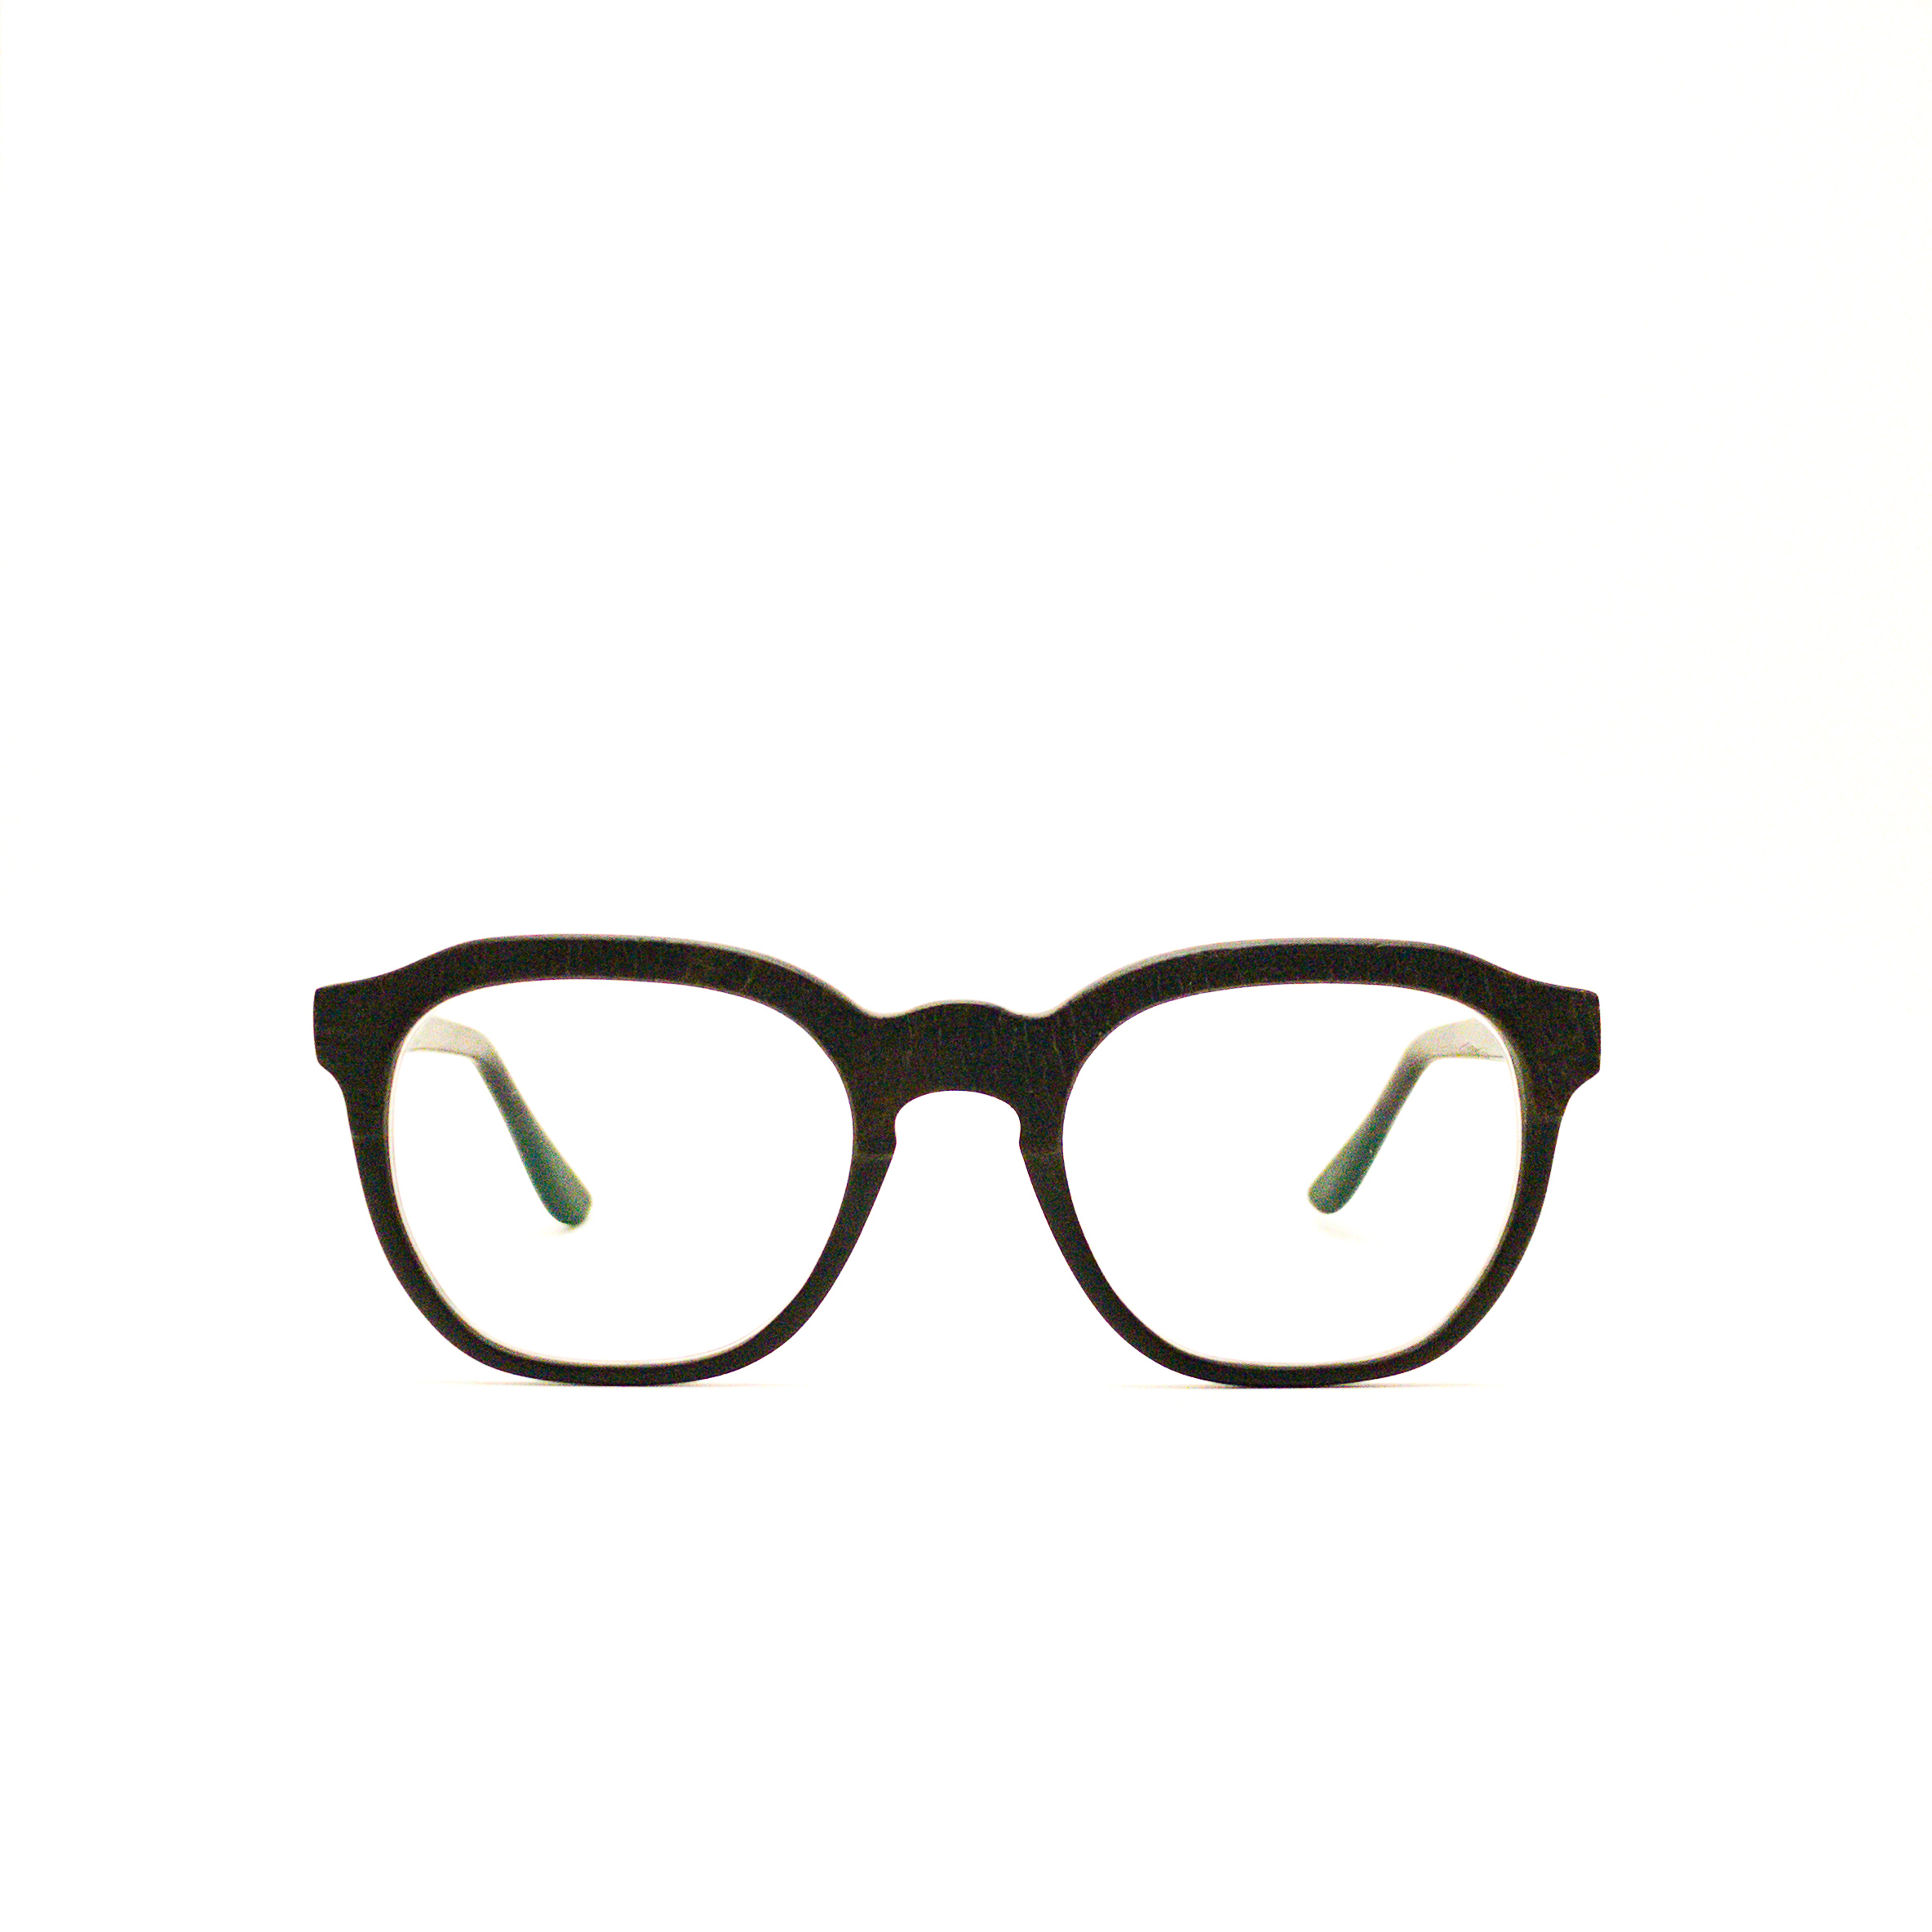 Optik Dudli AG - Negrelli Eyewear 210577